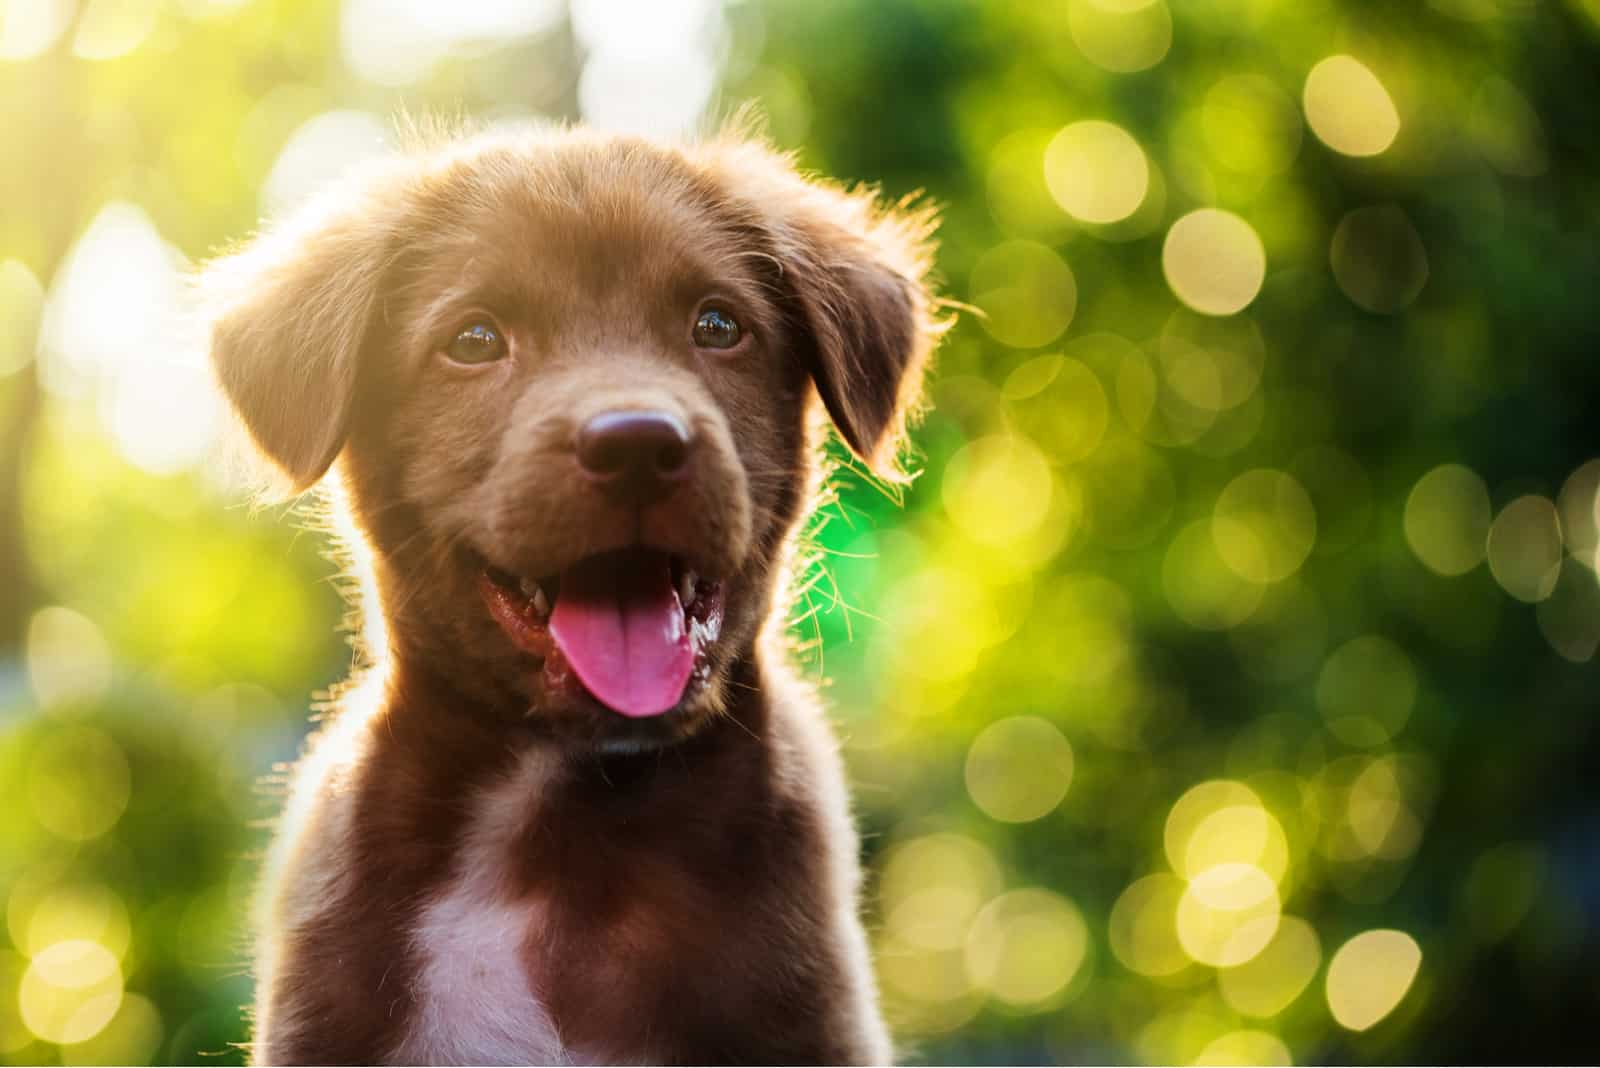 a portrait of a cute brown puppy in nature